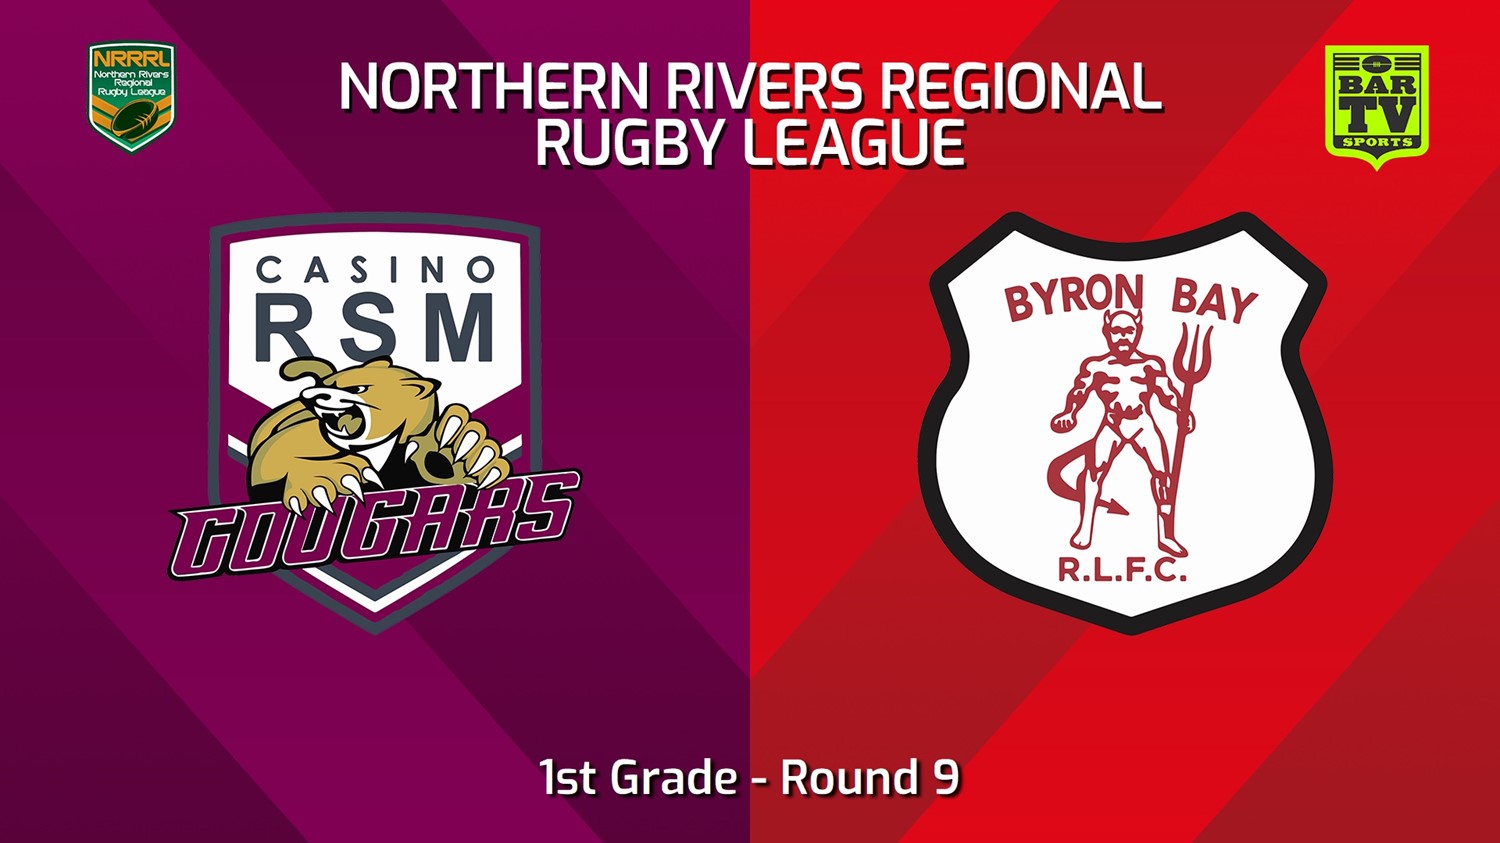 240602-video-Northern Rivers Round 9 - 1st Grade - Casino RSM Cougars v Byron Bay Red Devils Slate Image